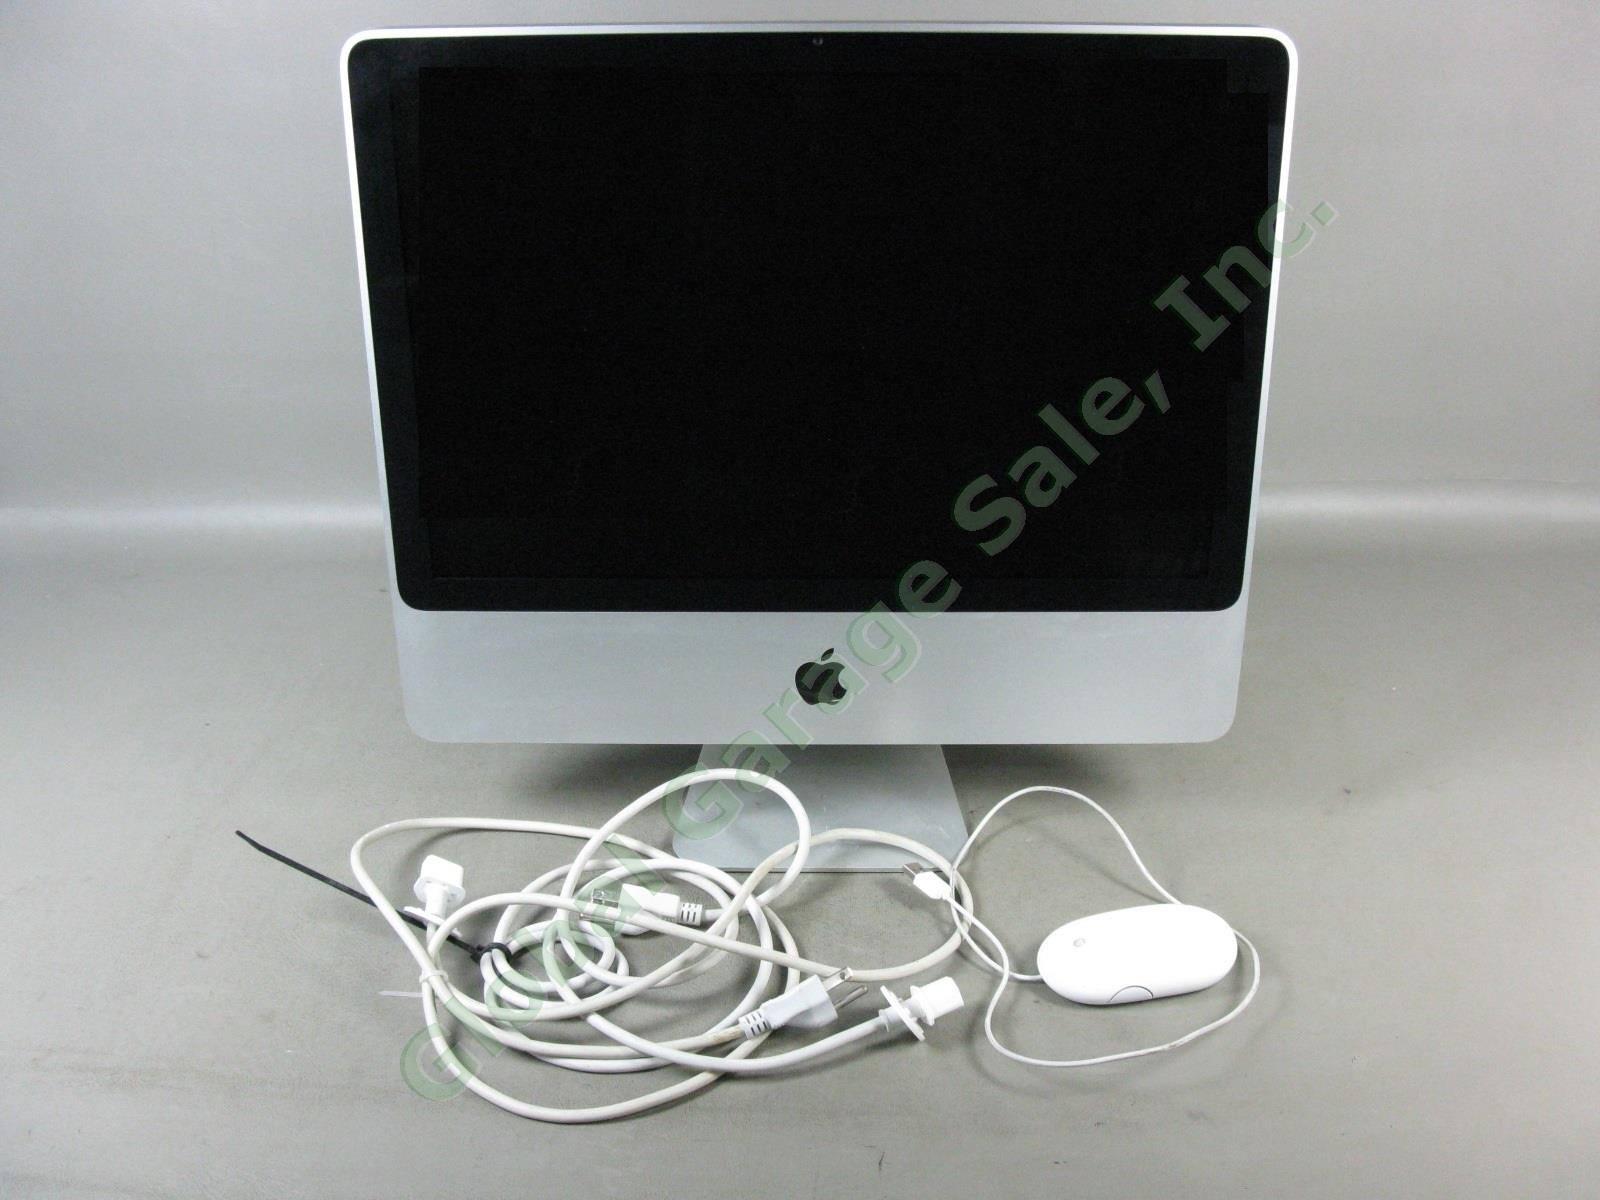 Apple iMac A1224 20" 2.26GHz Intel Core 2 Duo P7550 2GB RAM 160GB HDD MC015LL/B